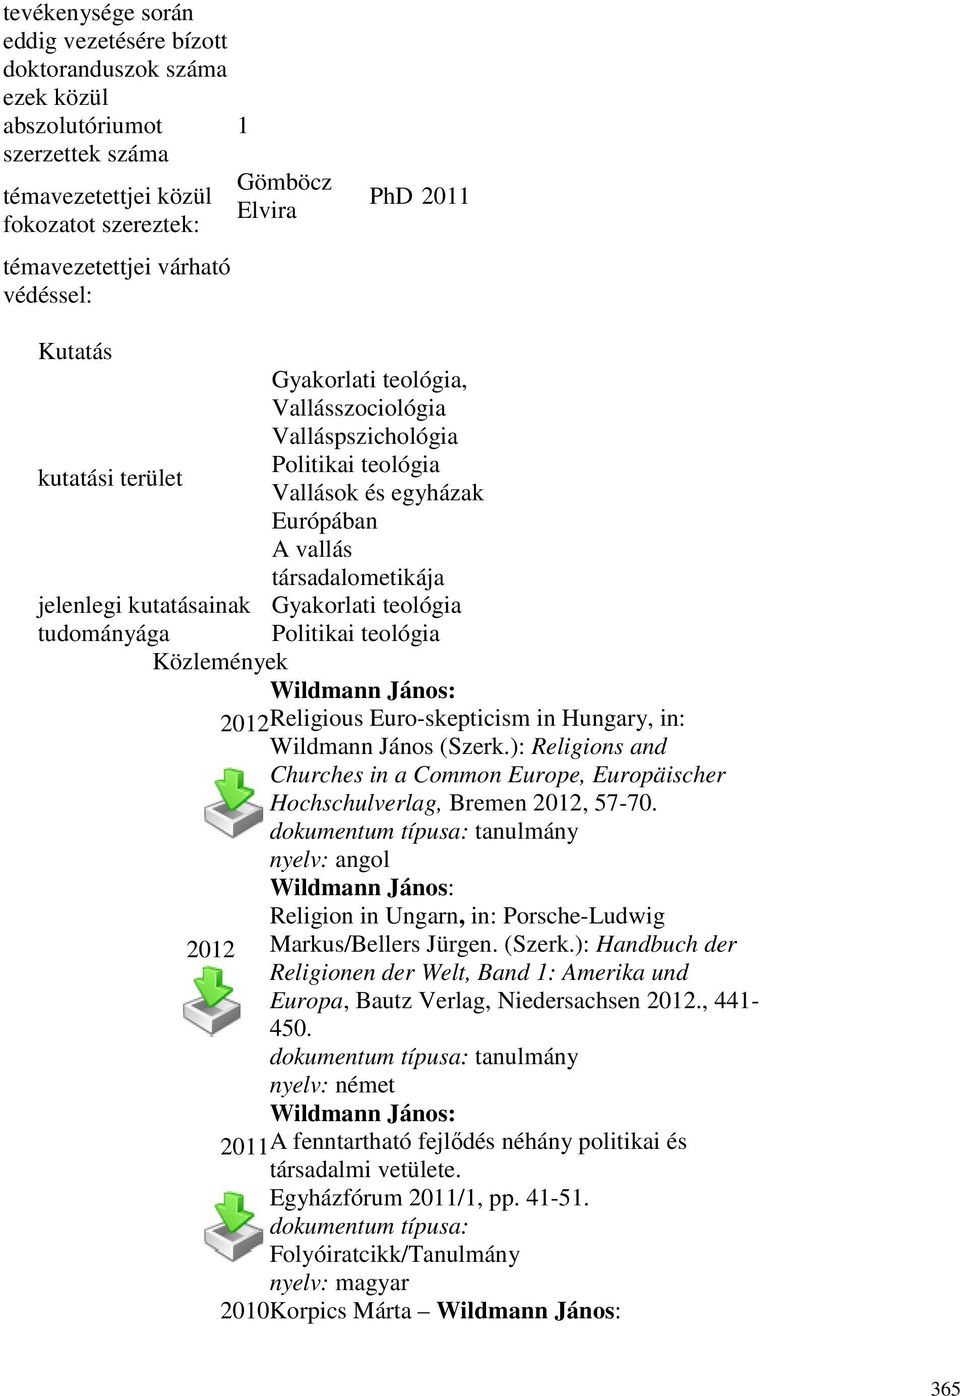 Gyakorlati teológia tudományága Politikai teológia Közlemények 2012Religious Euro-skepticism in Hungary, in: Wildmann János (Szerk.